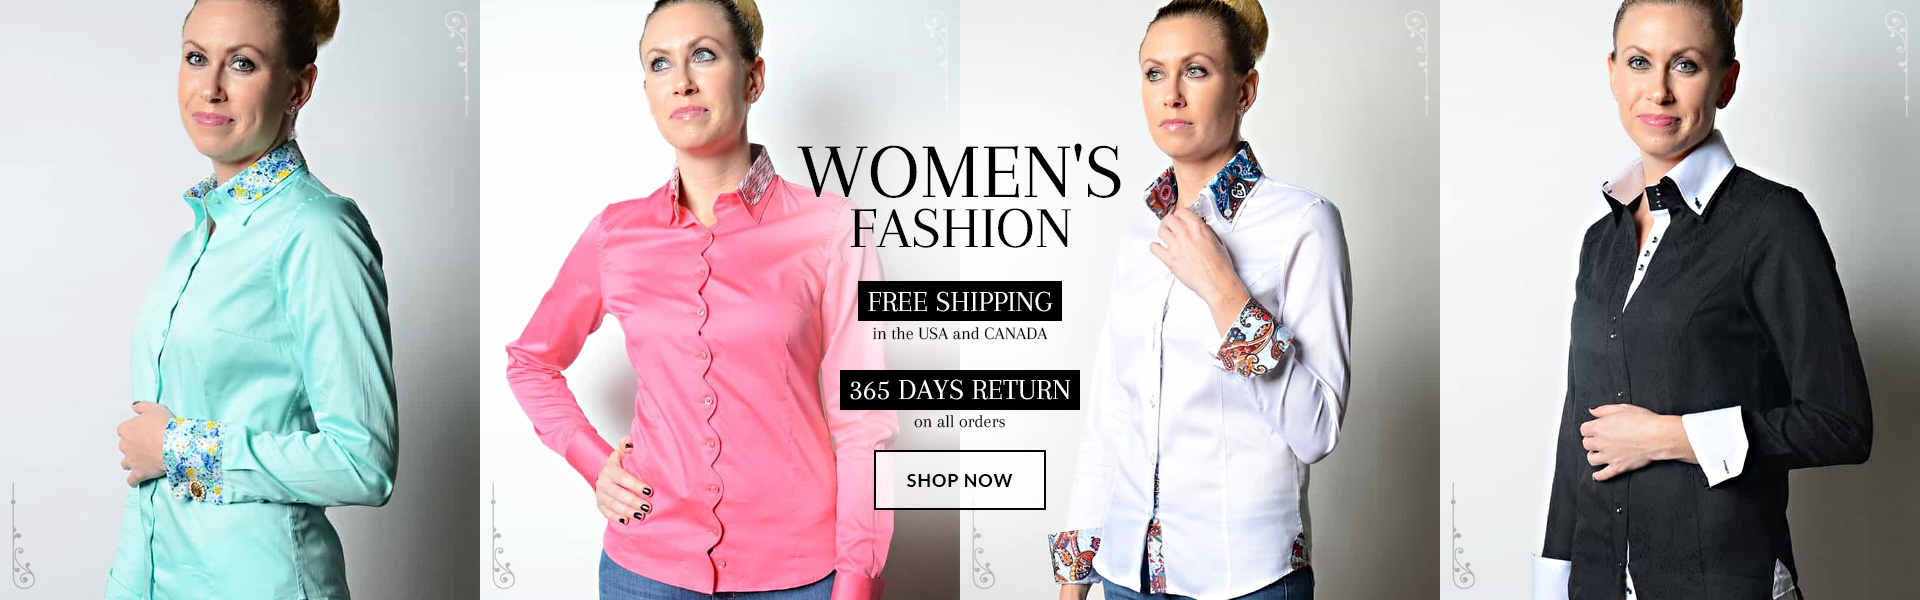 Women fashion clothing